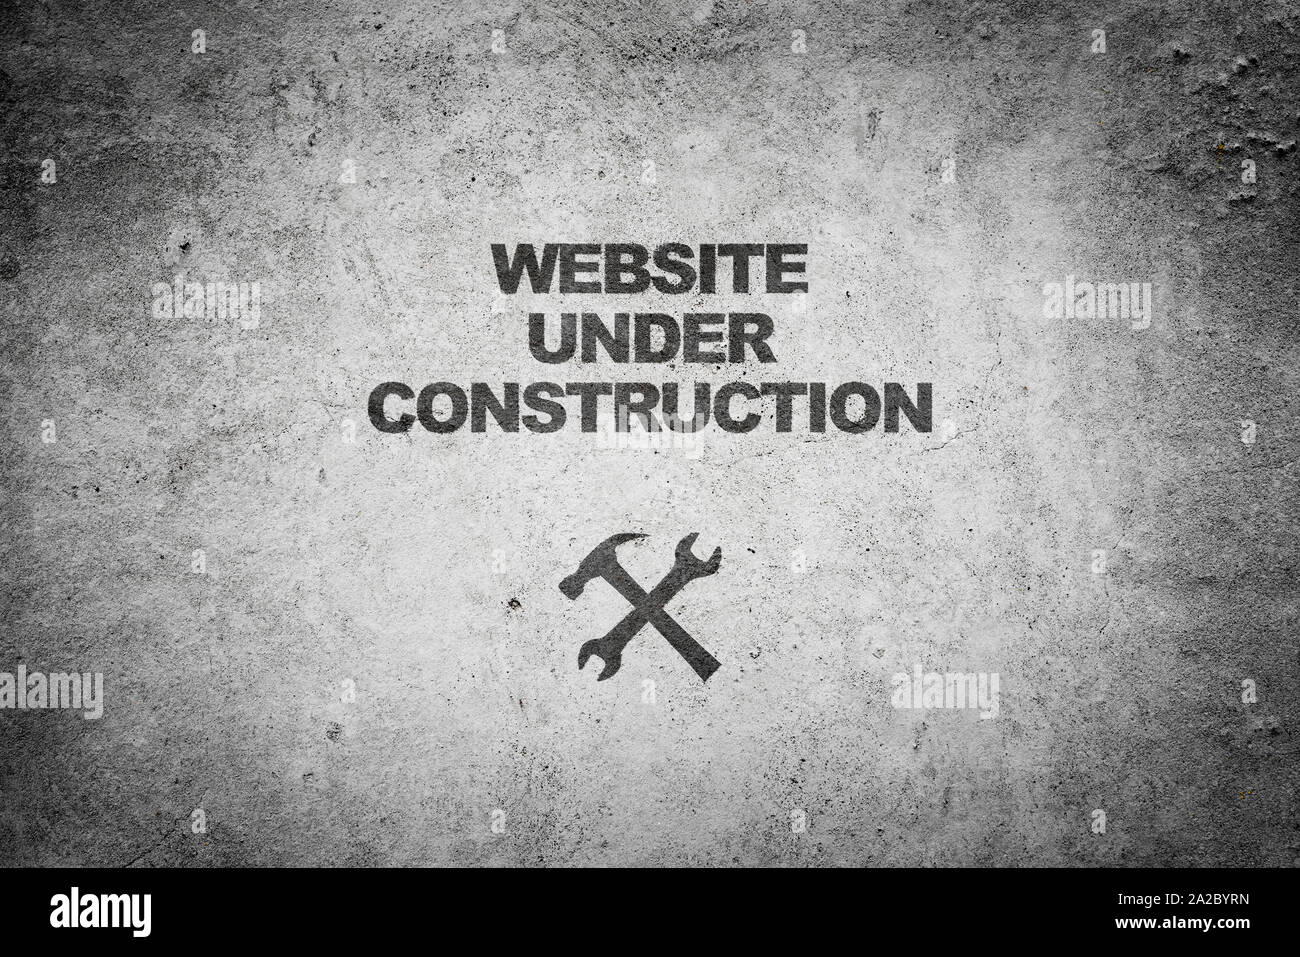 Website under construction Stock Photo